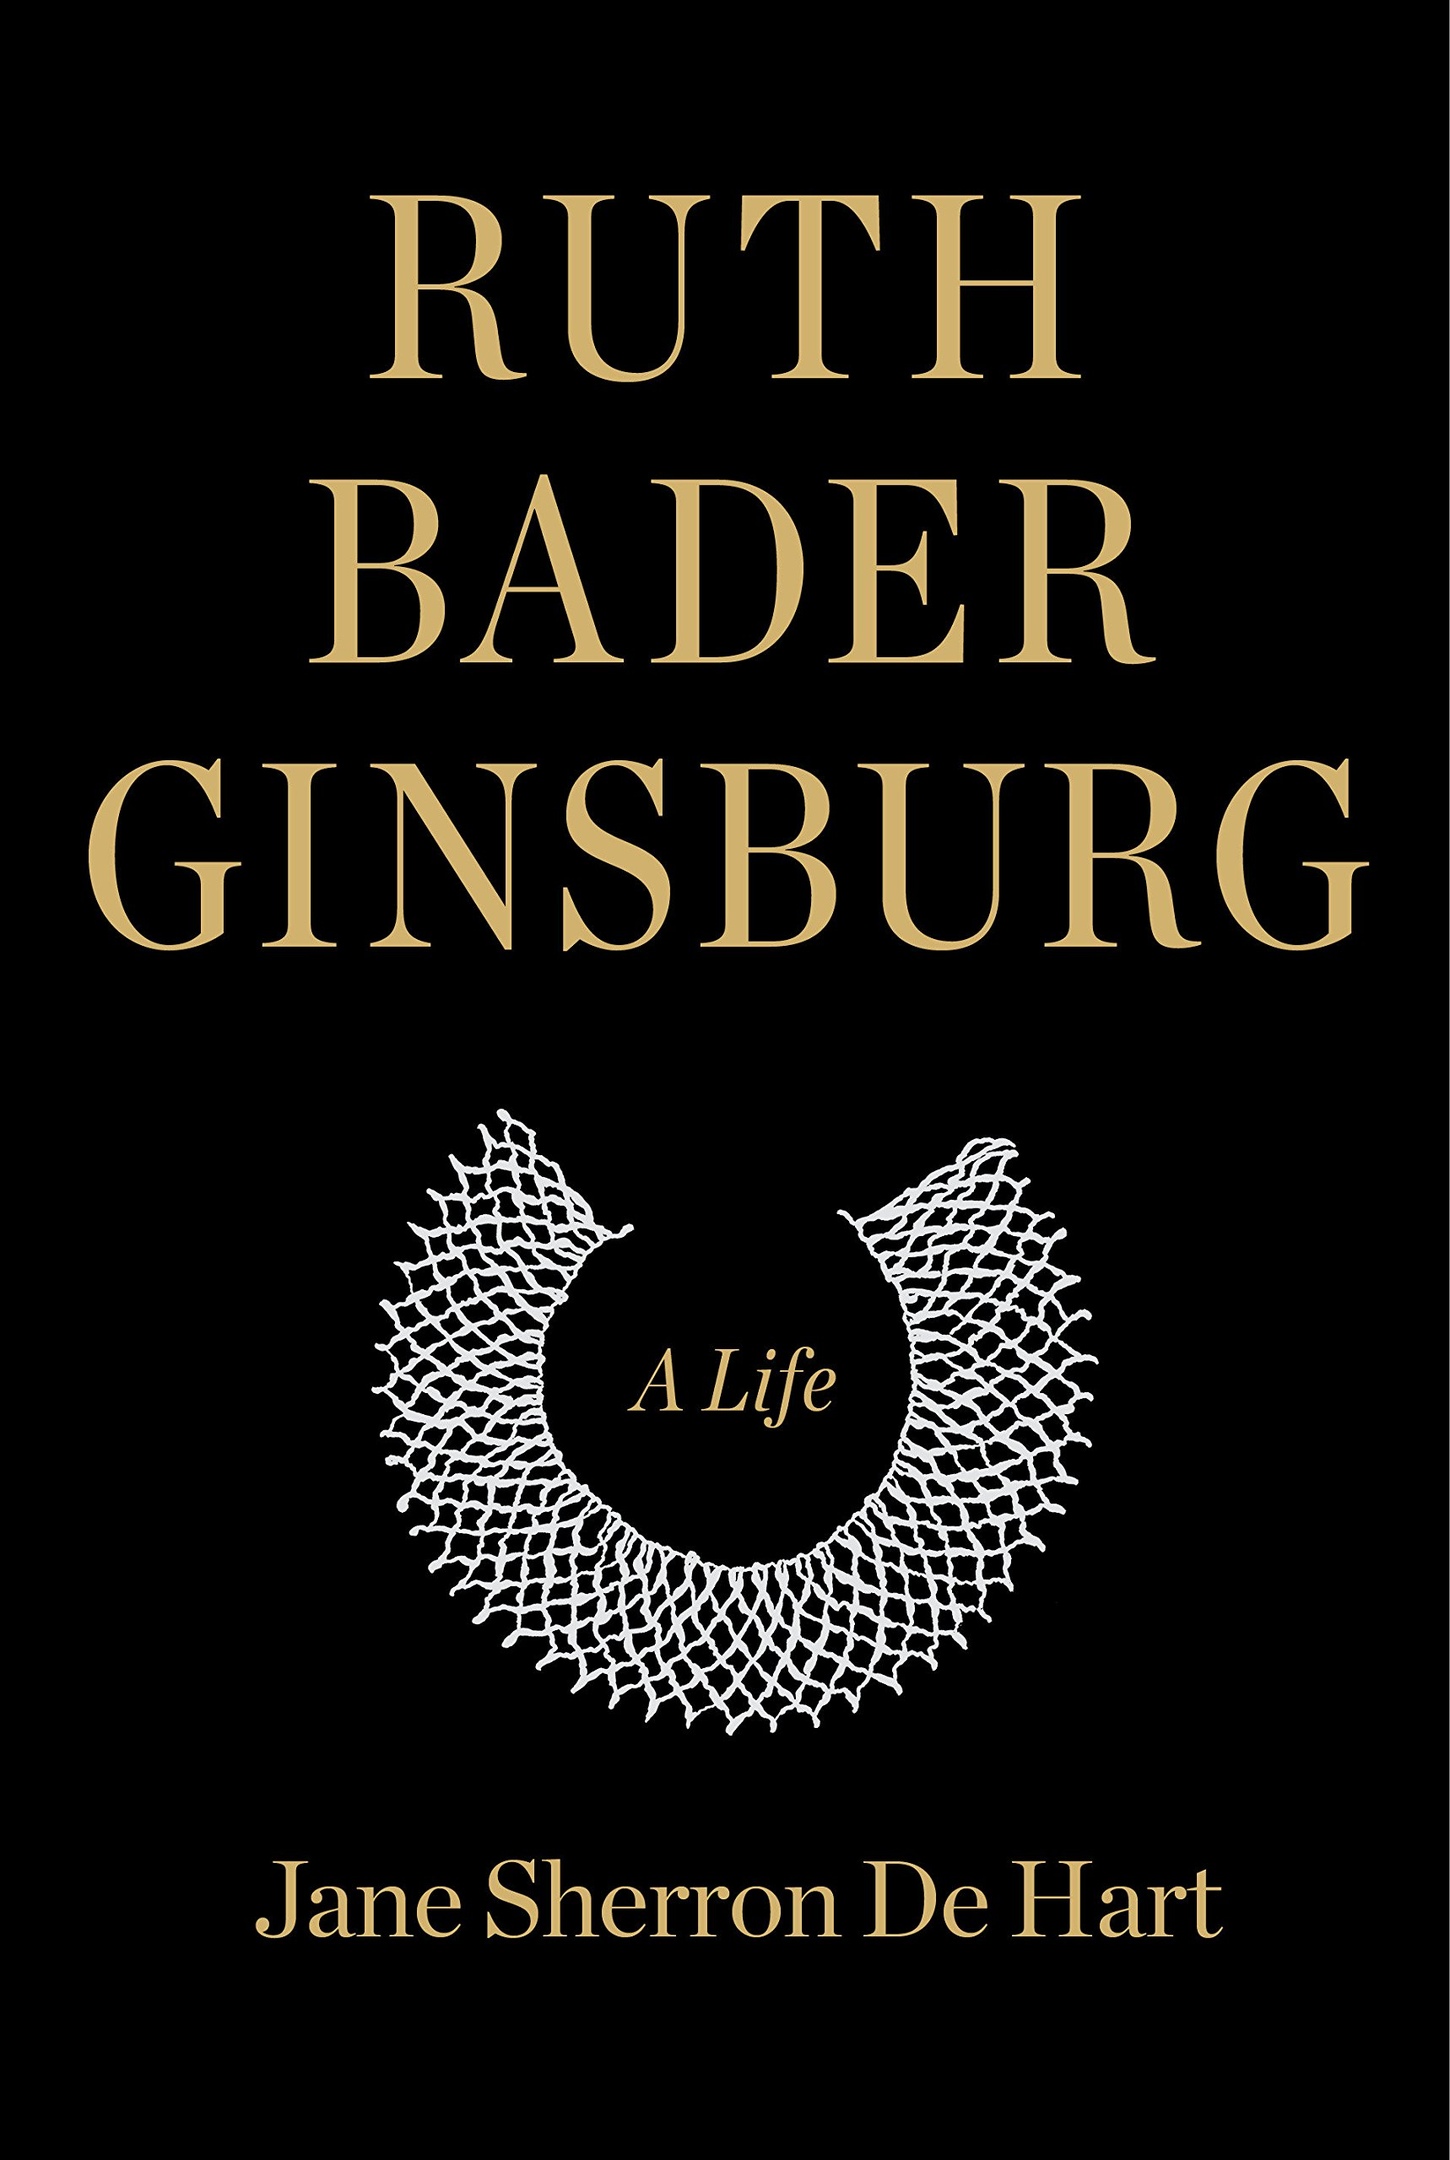 Jane Sherron De Hart – Ruth Bader Ginsburg: A Life